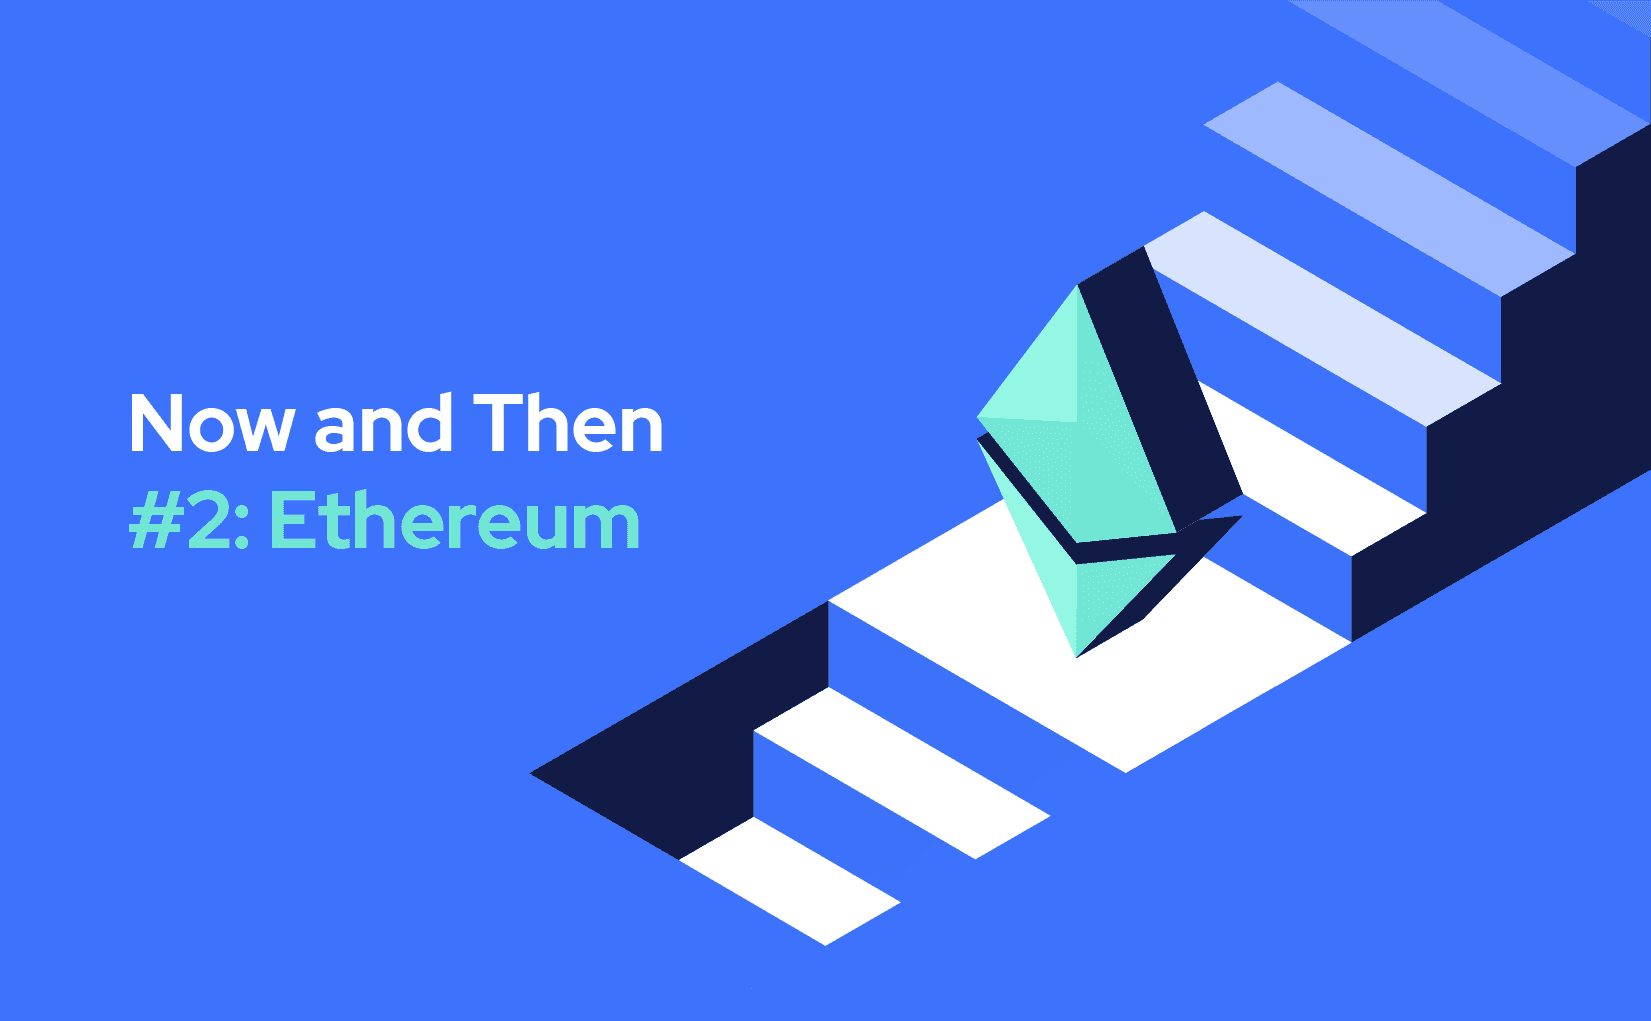 Ethereum has been evolving since 2014